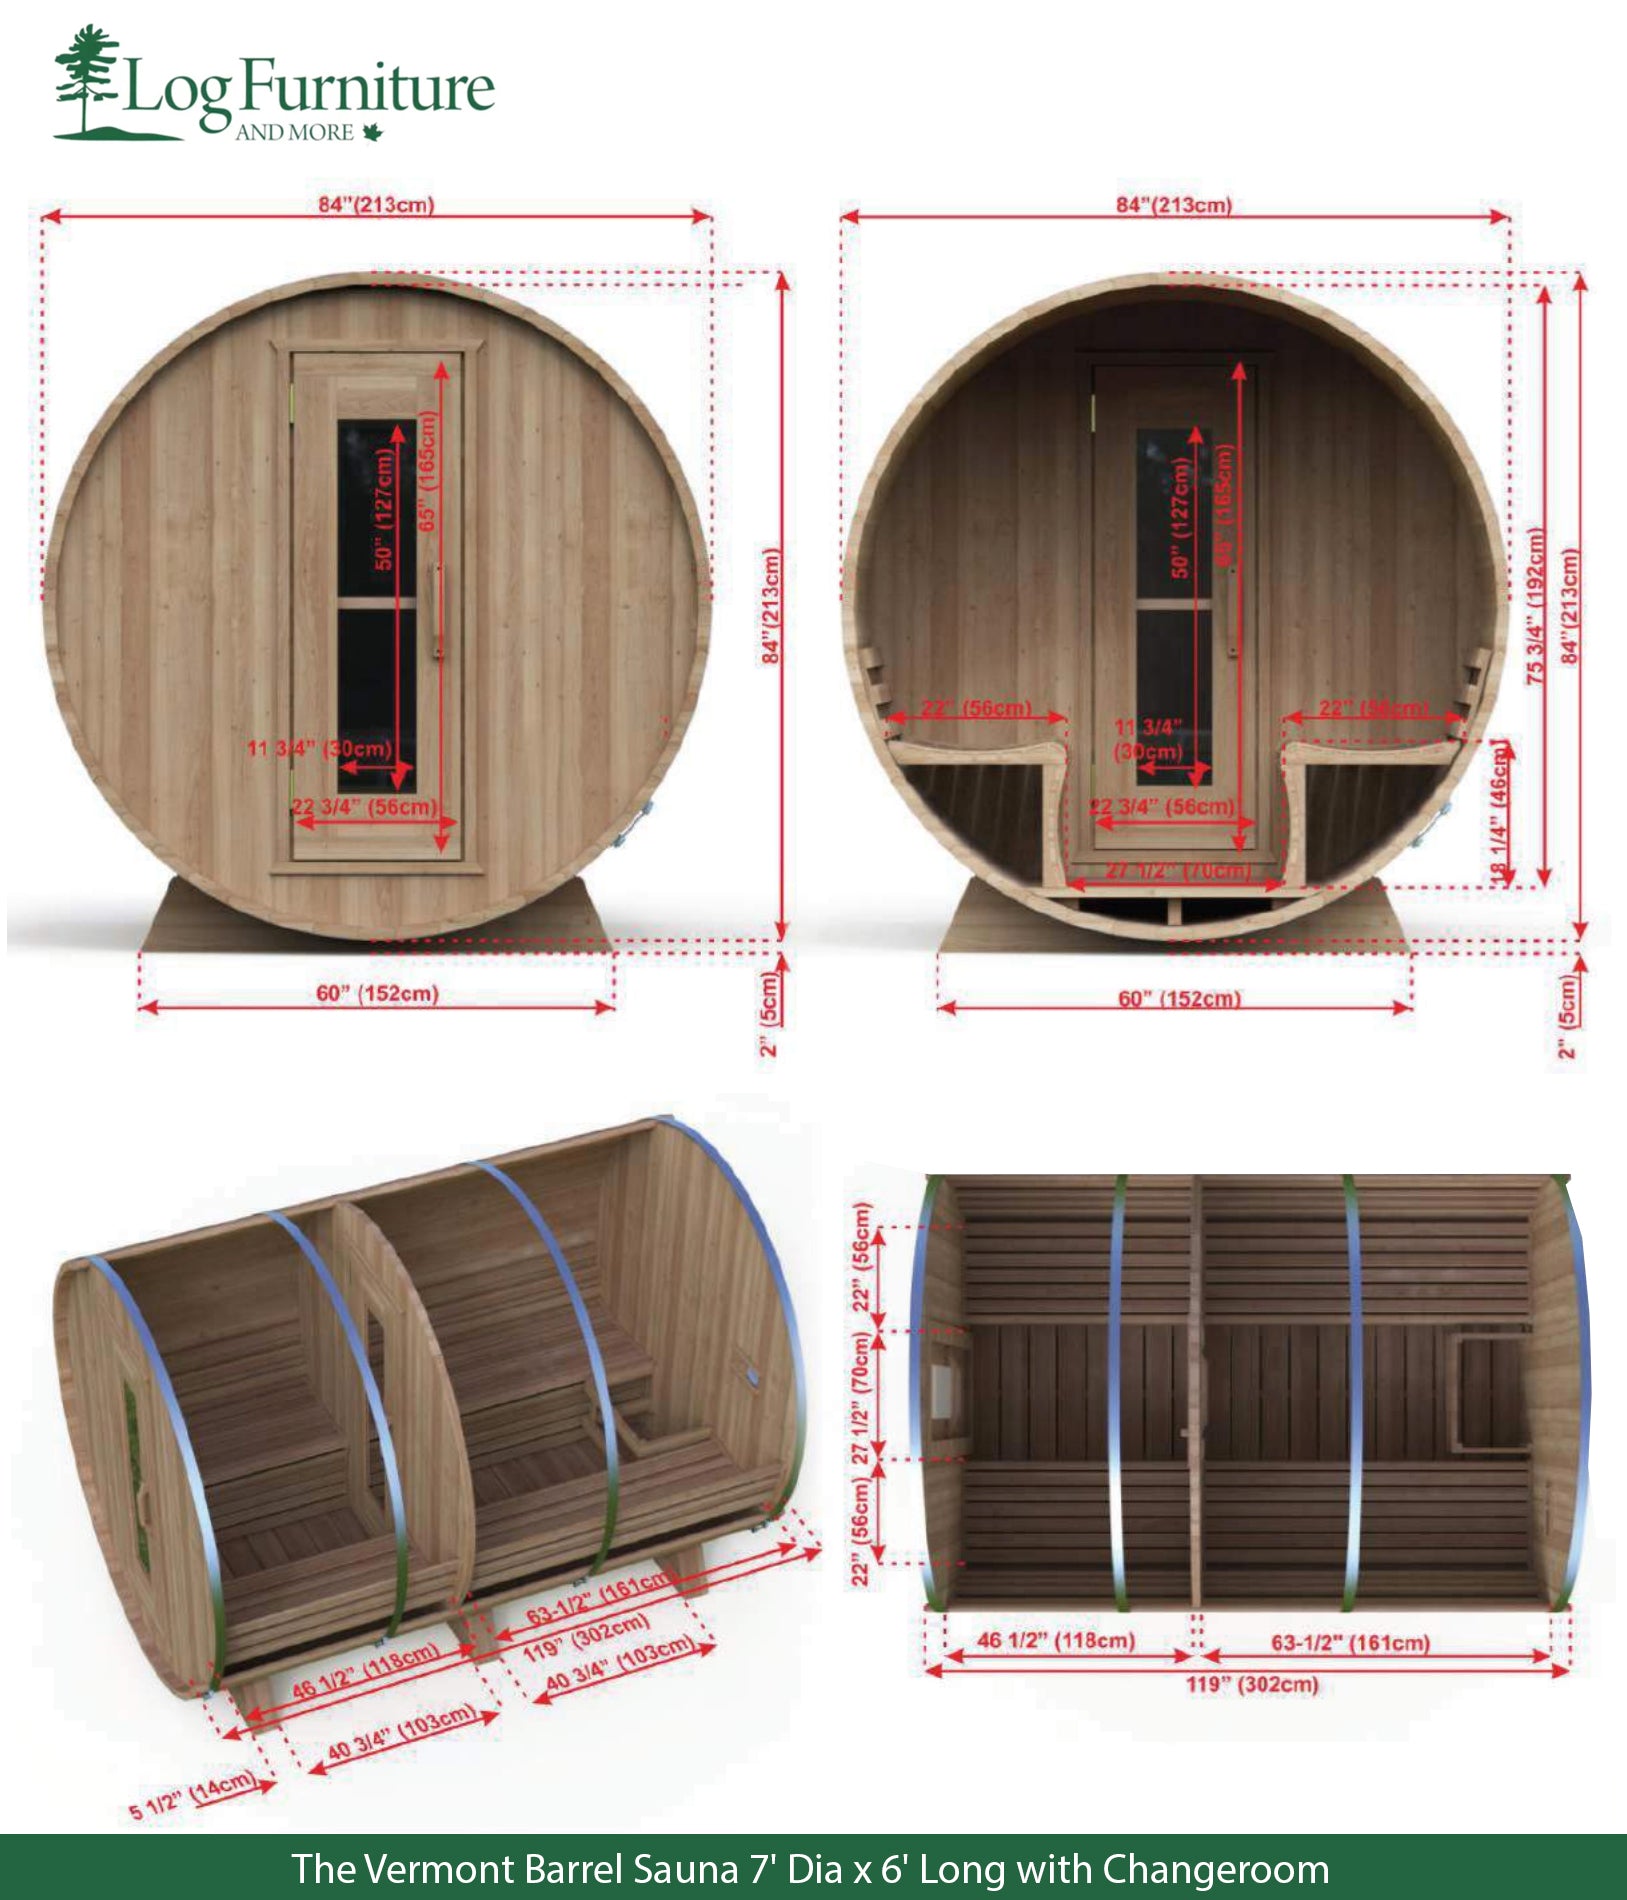 The Vermont Barrel Sauna 7' Dia x 6' Long with Changeroom